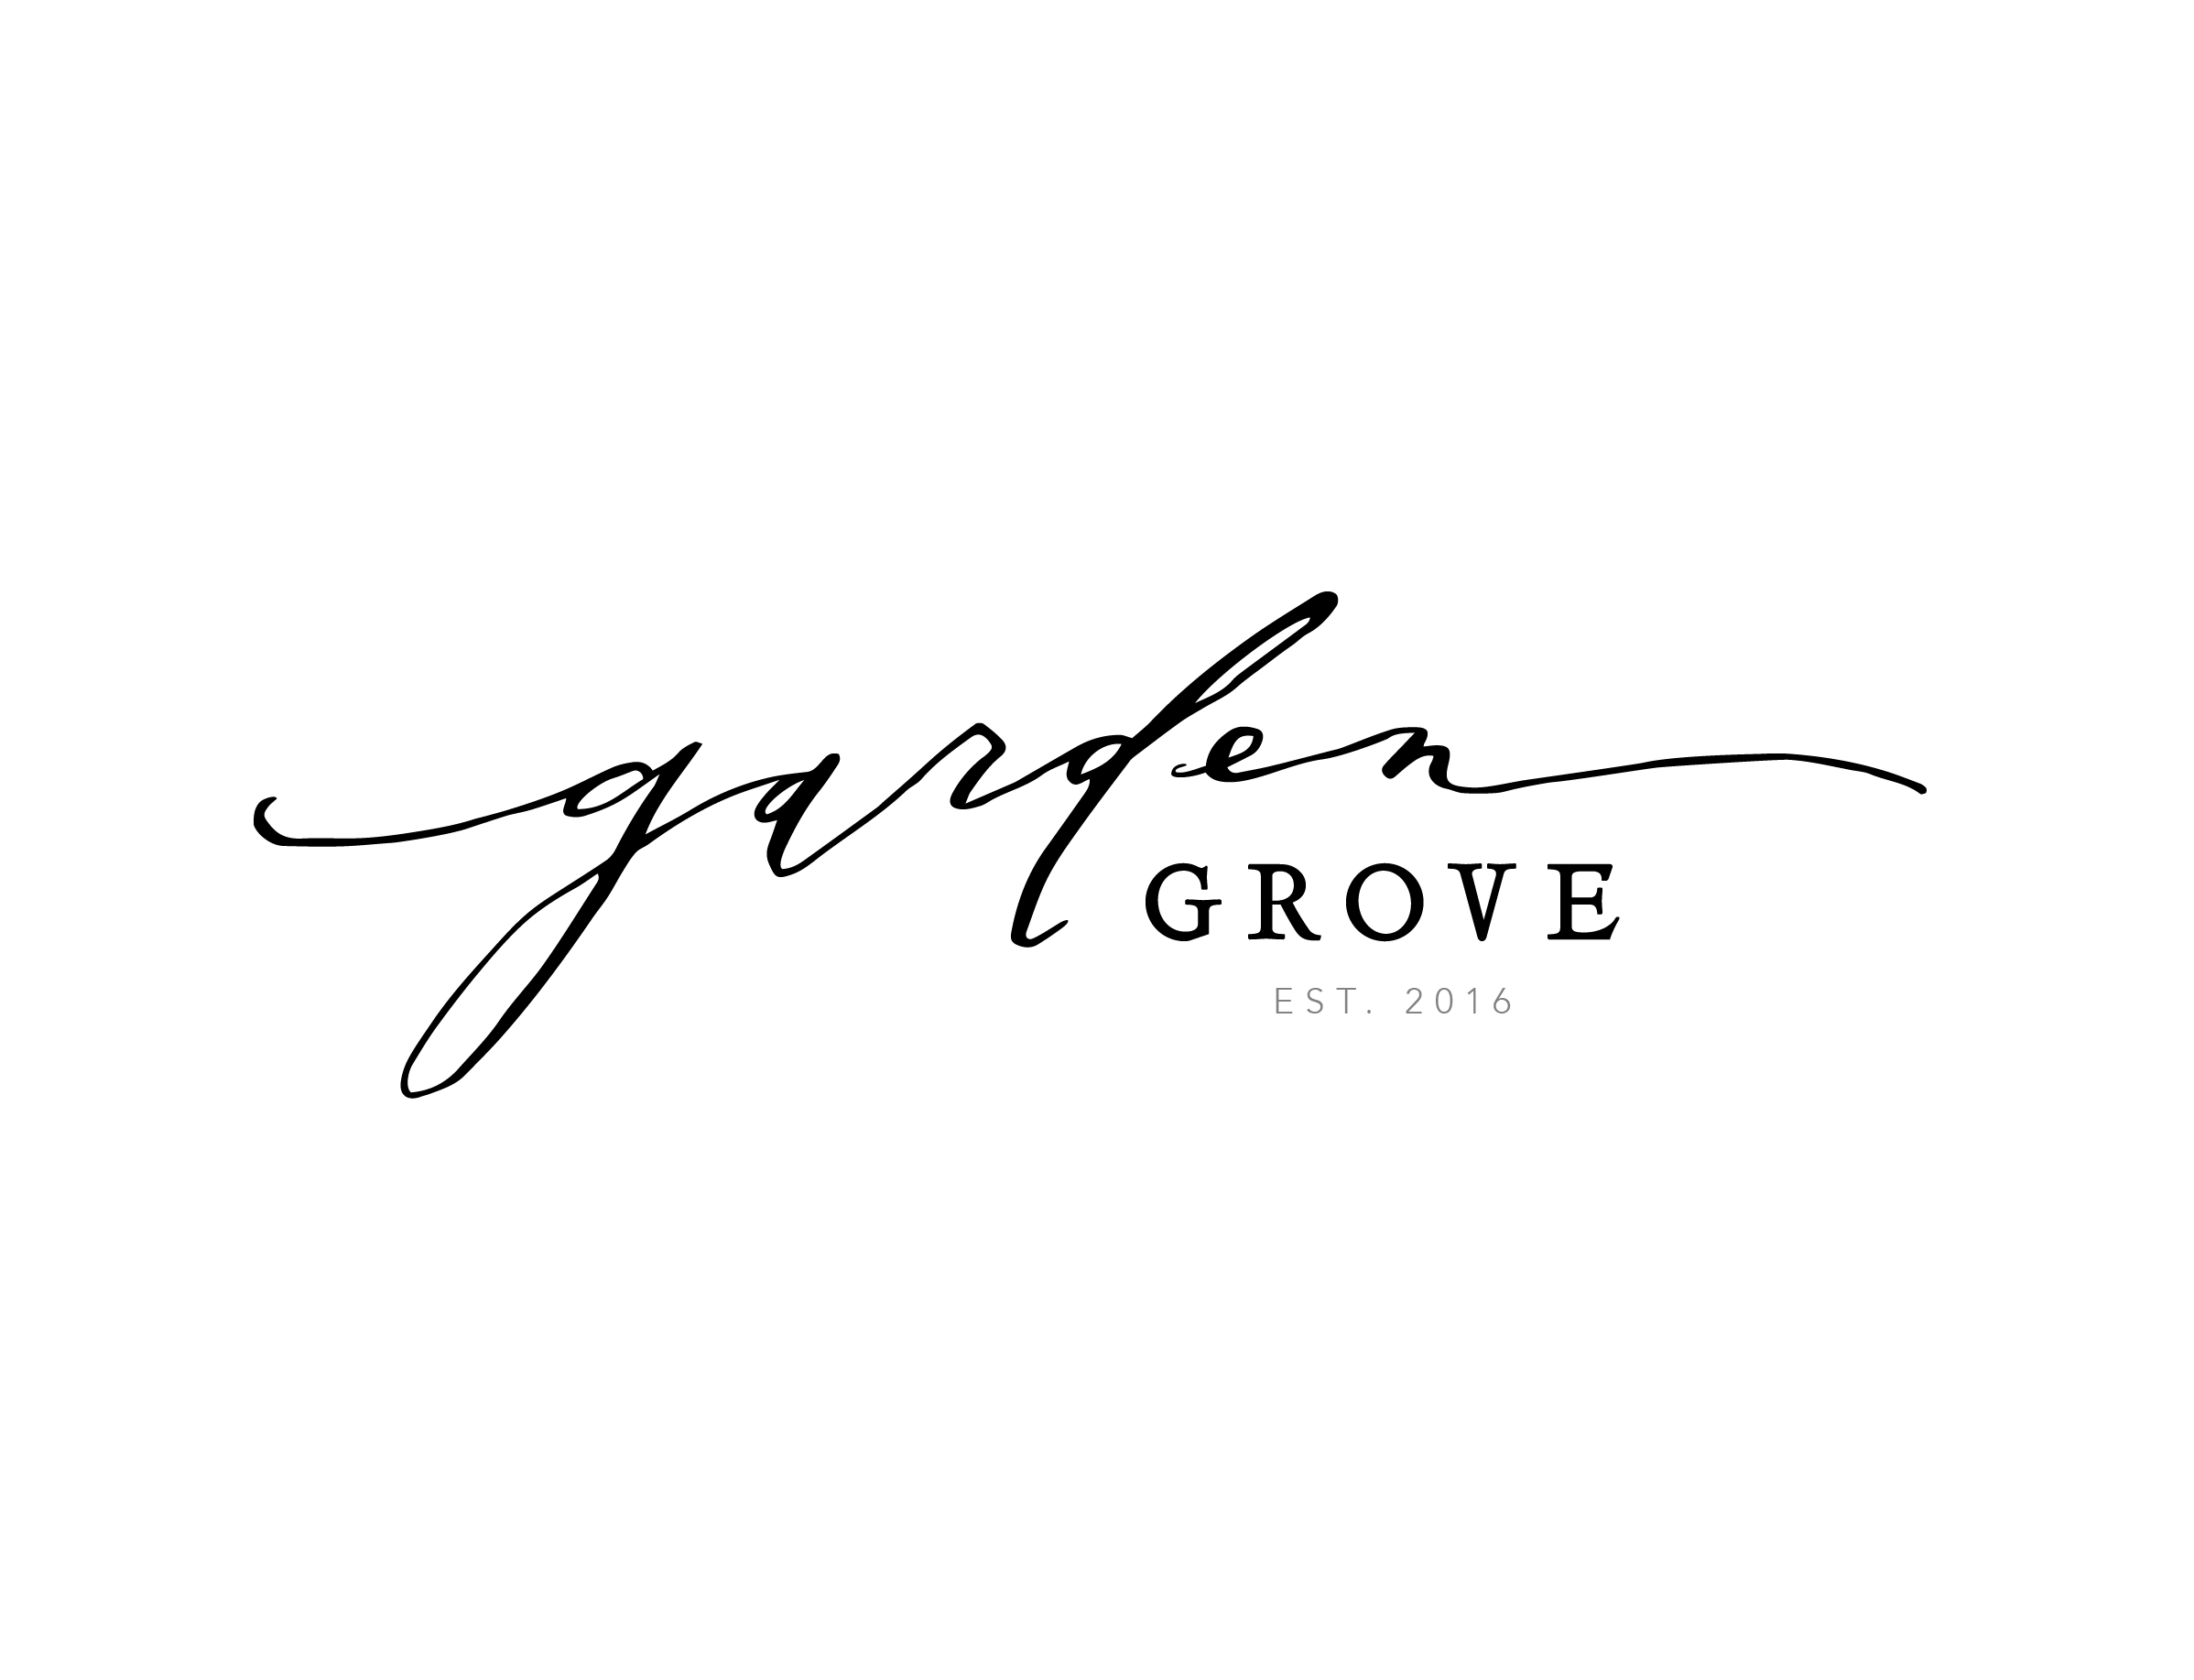 GardenGrove_Logo_d3-01.png